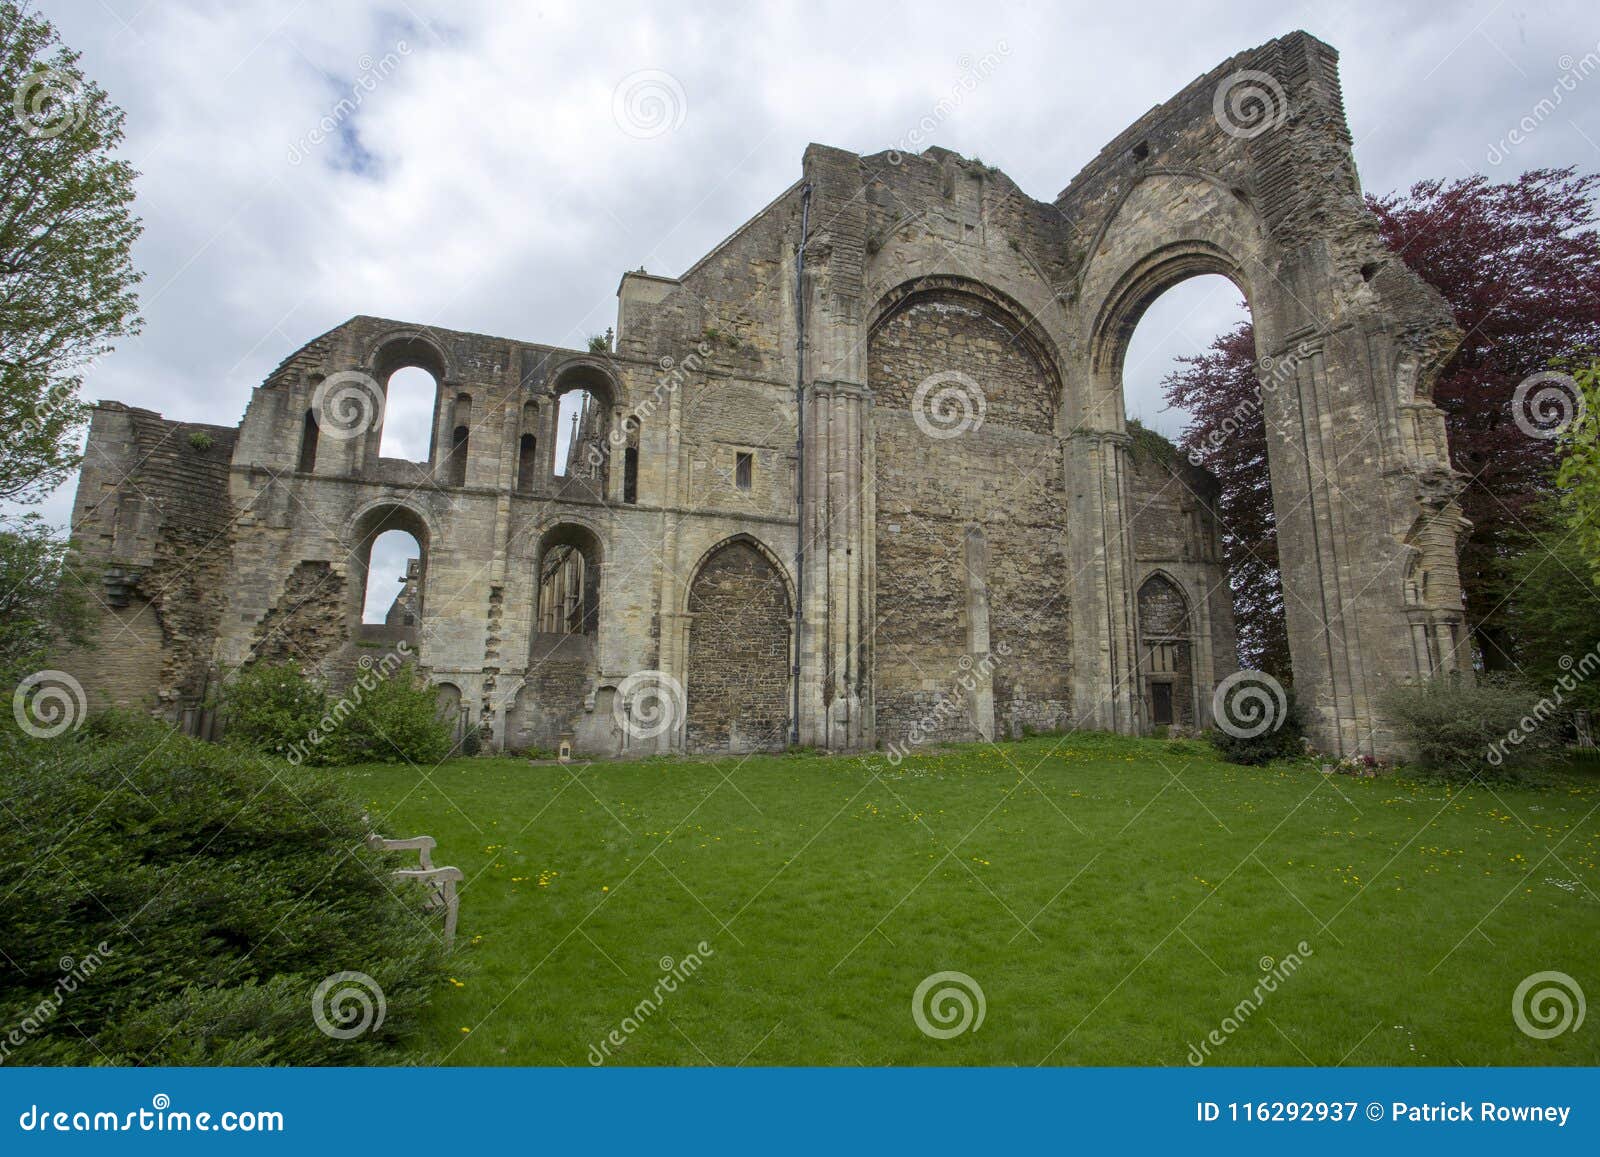 malmesbury abbey transept remains